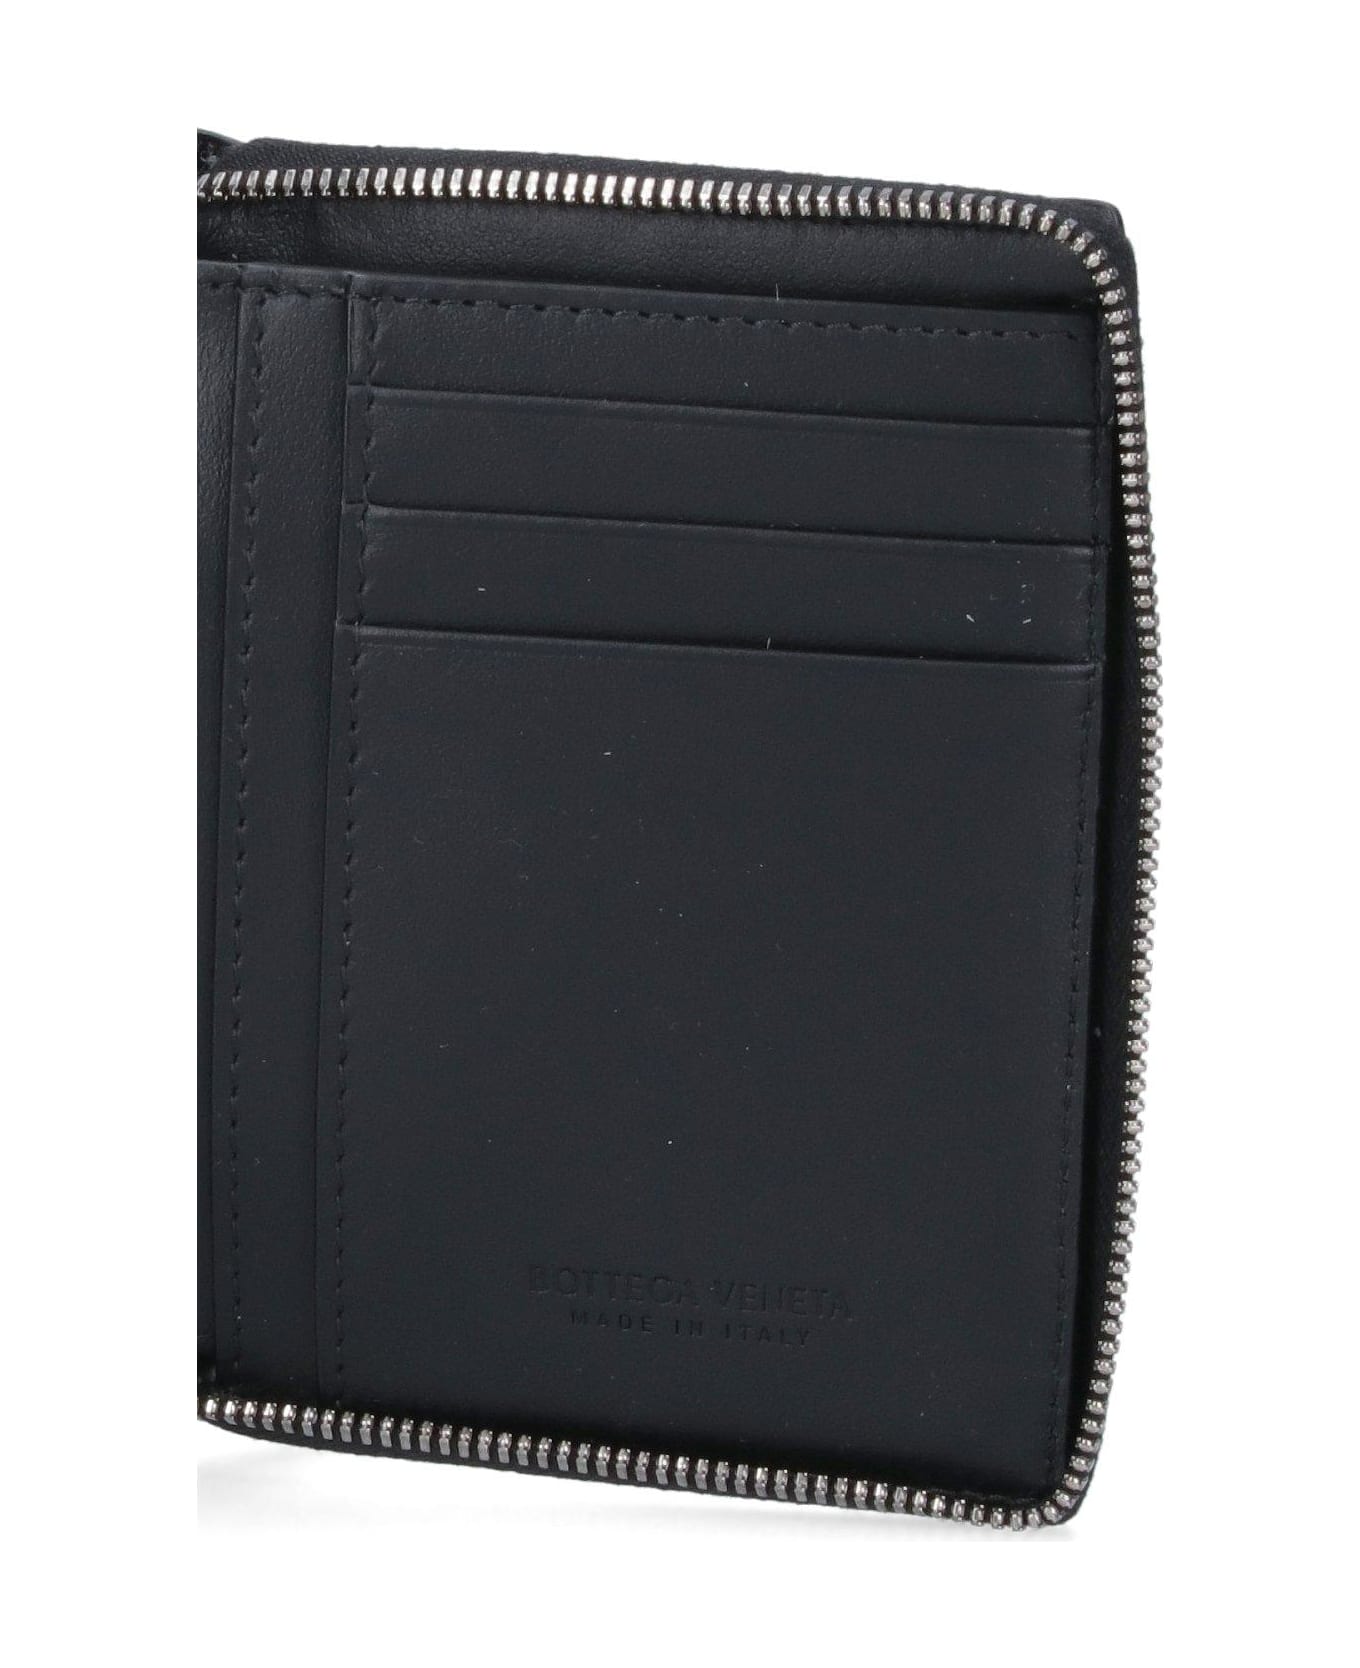 Bottega Veneta Cassette Zip Around Wallet - Black/silver